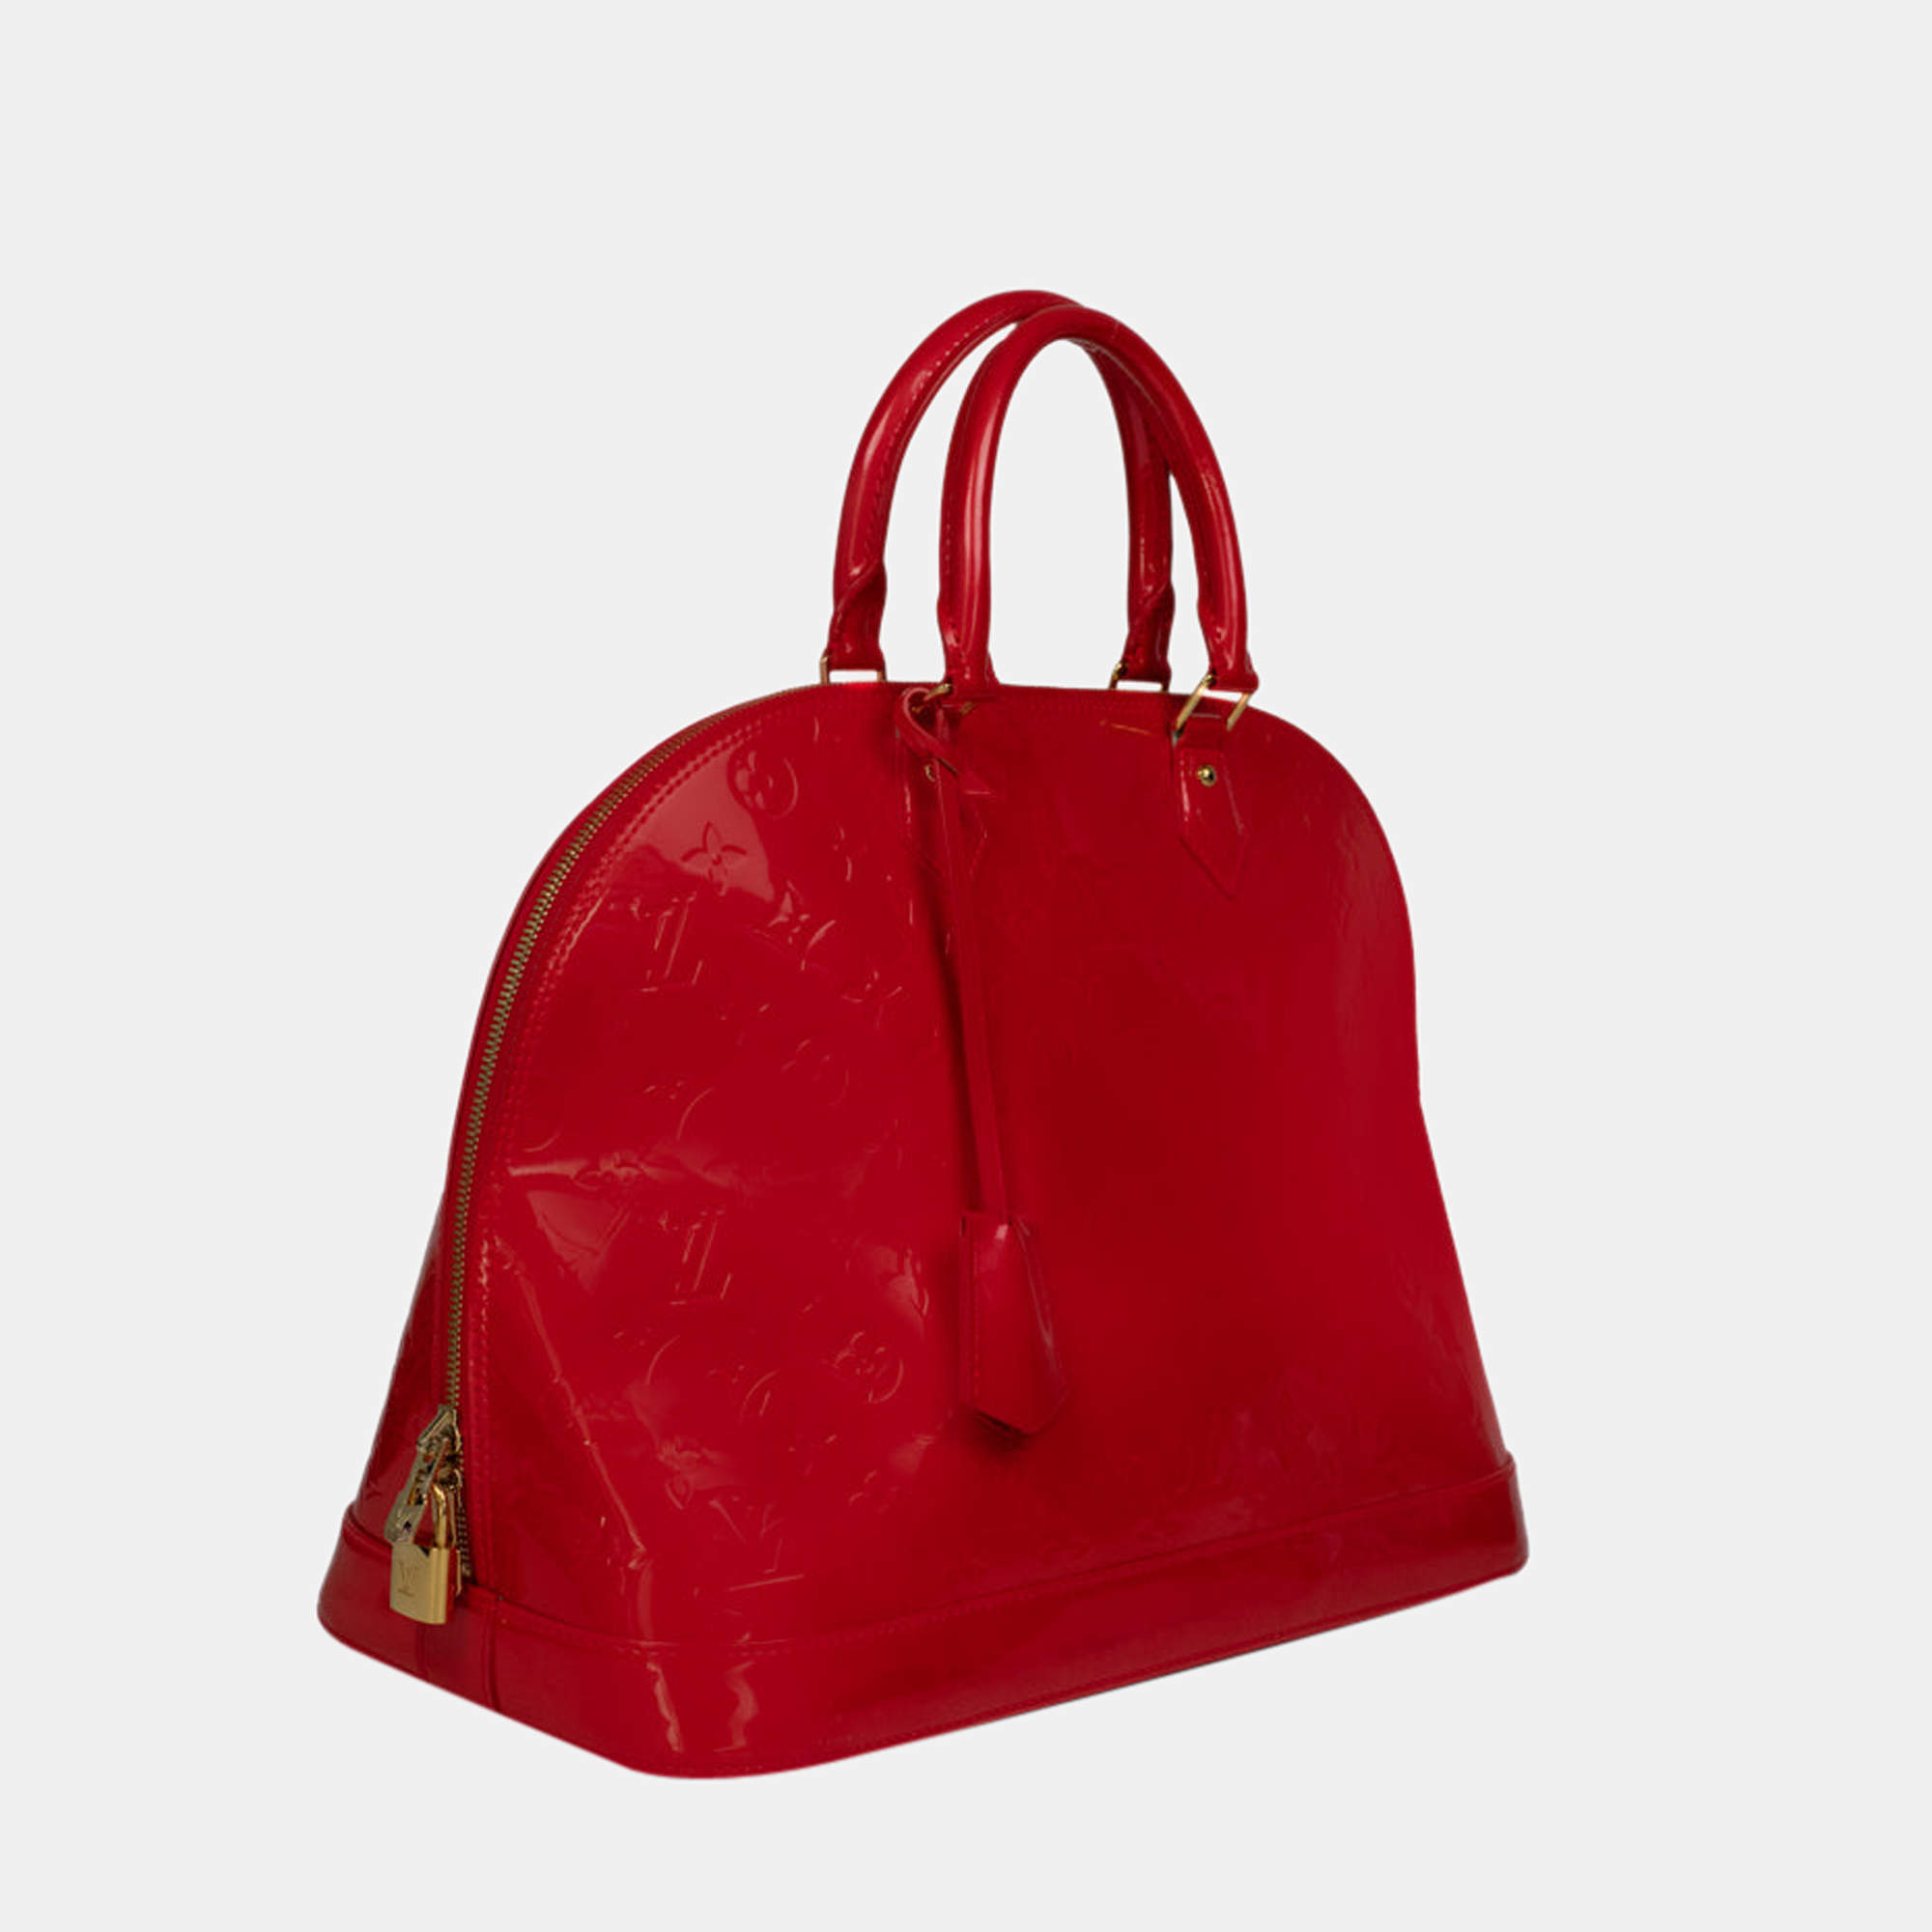 Louis Vuitton Alma Pm, $695, TheRealReal